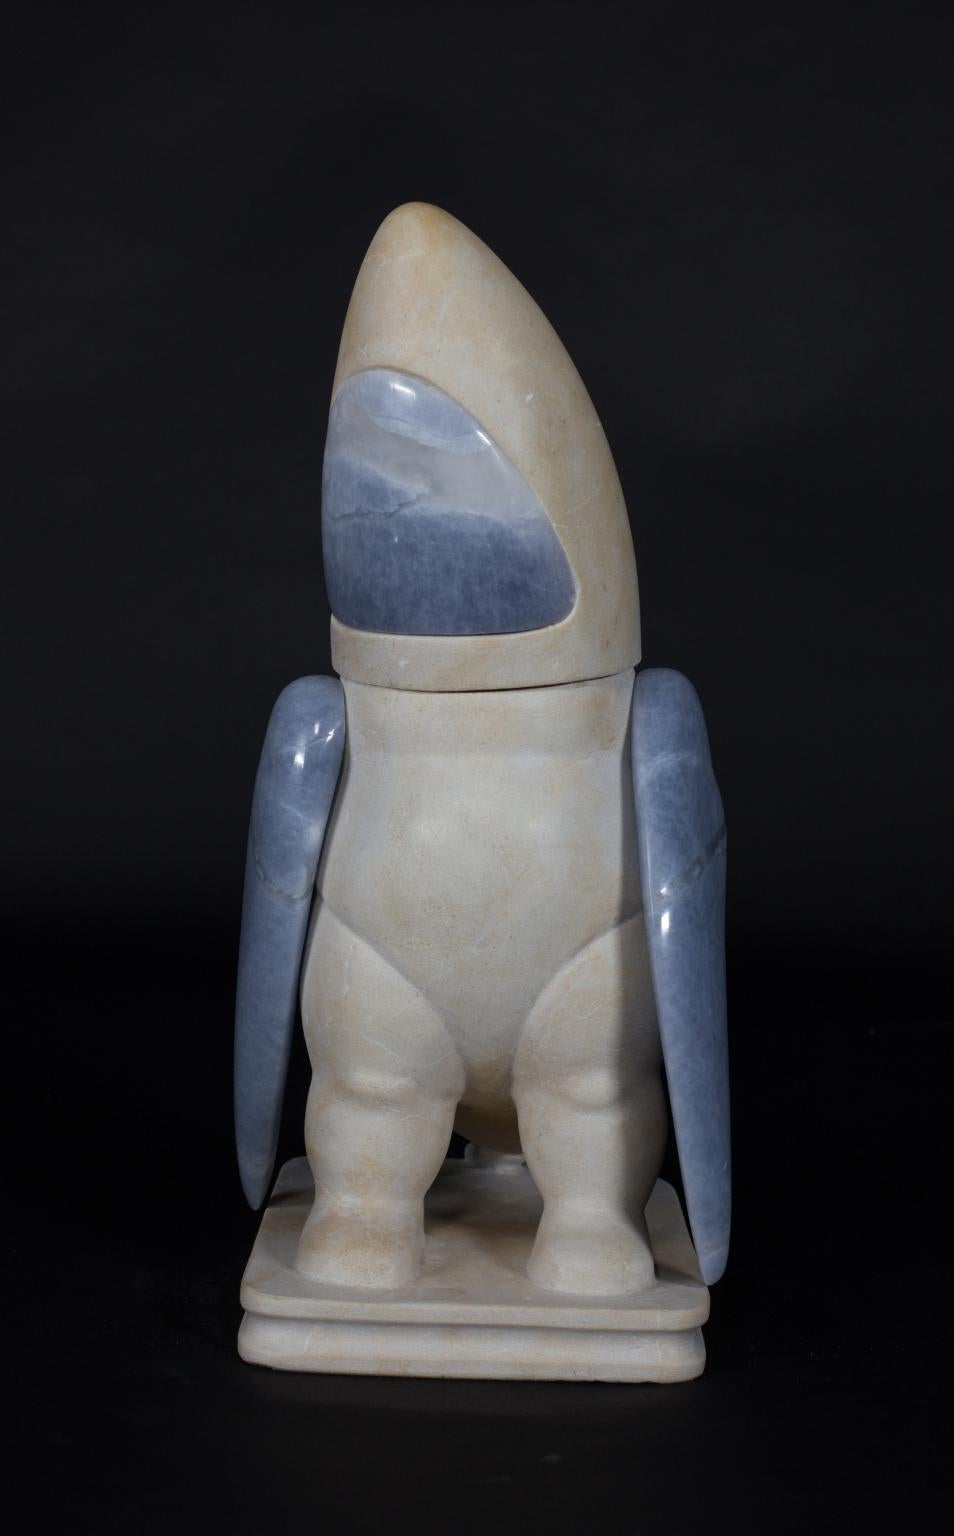 New Age Explorers: The Shark. Figurative Marble Sculpture by Mario Romero 2